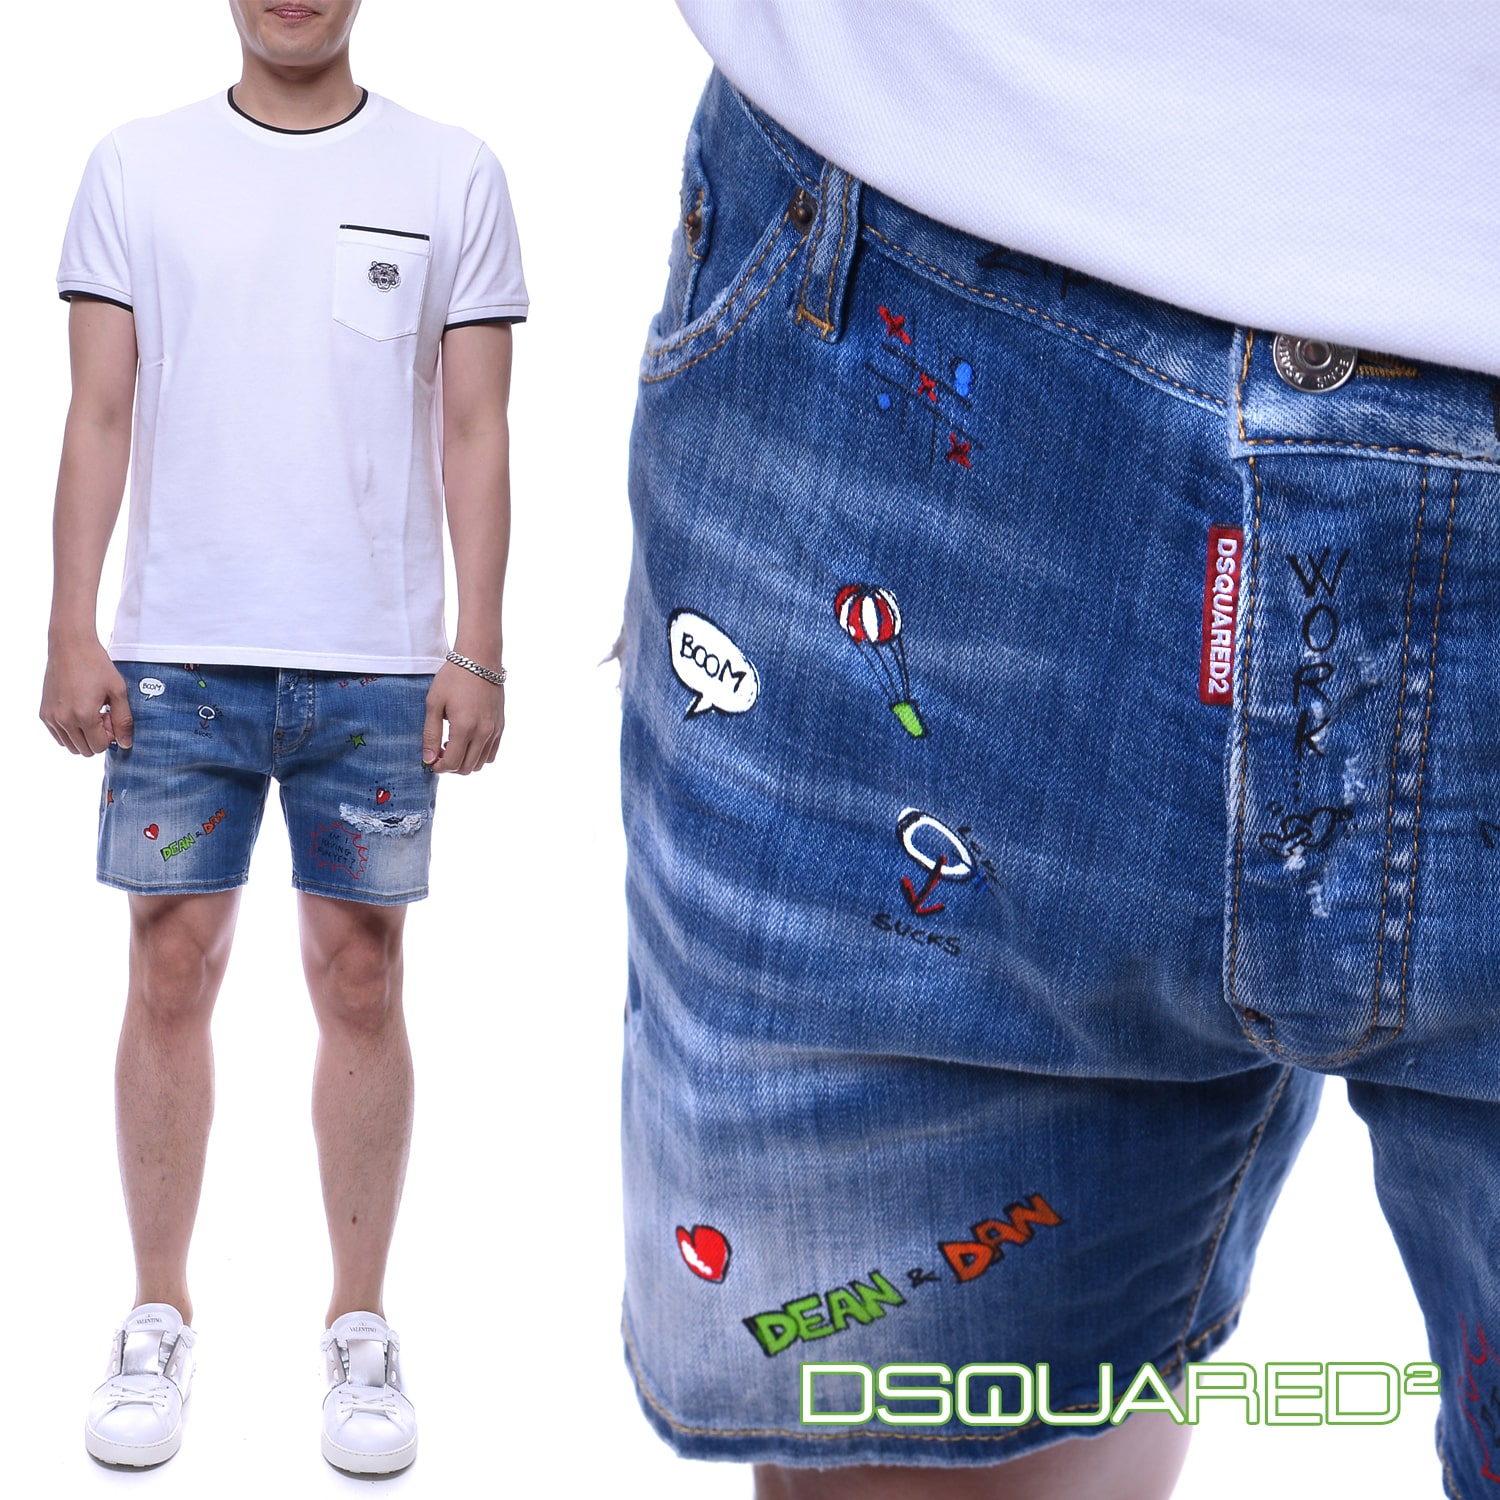 dsquared short jeans mens